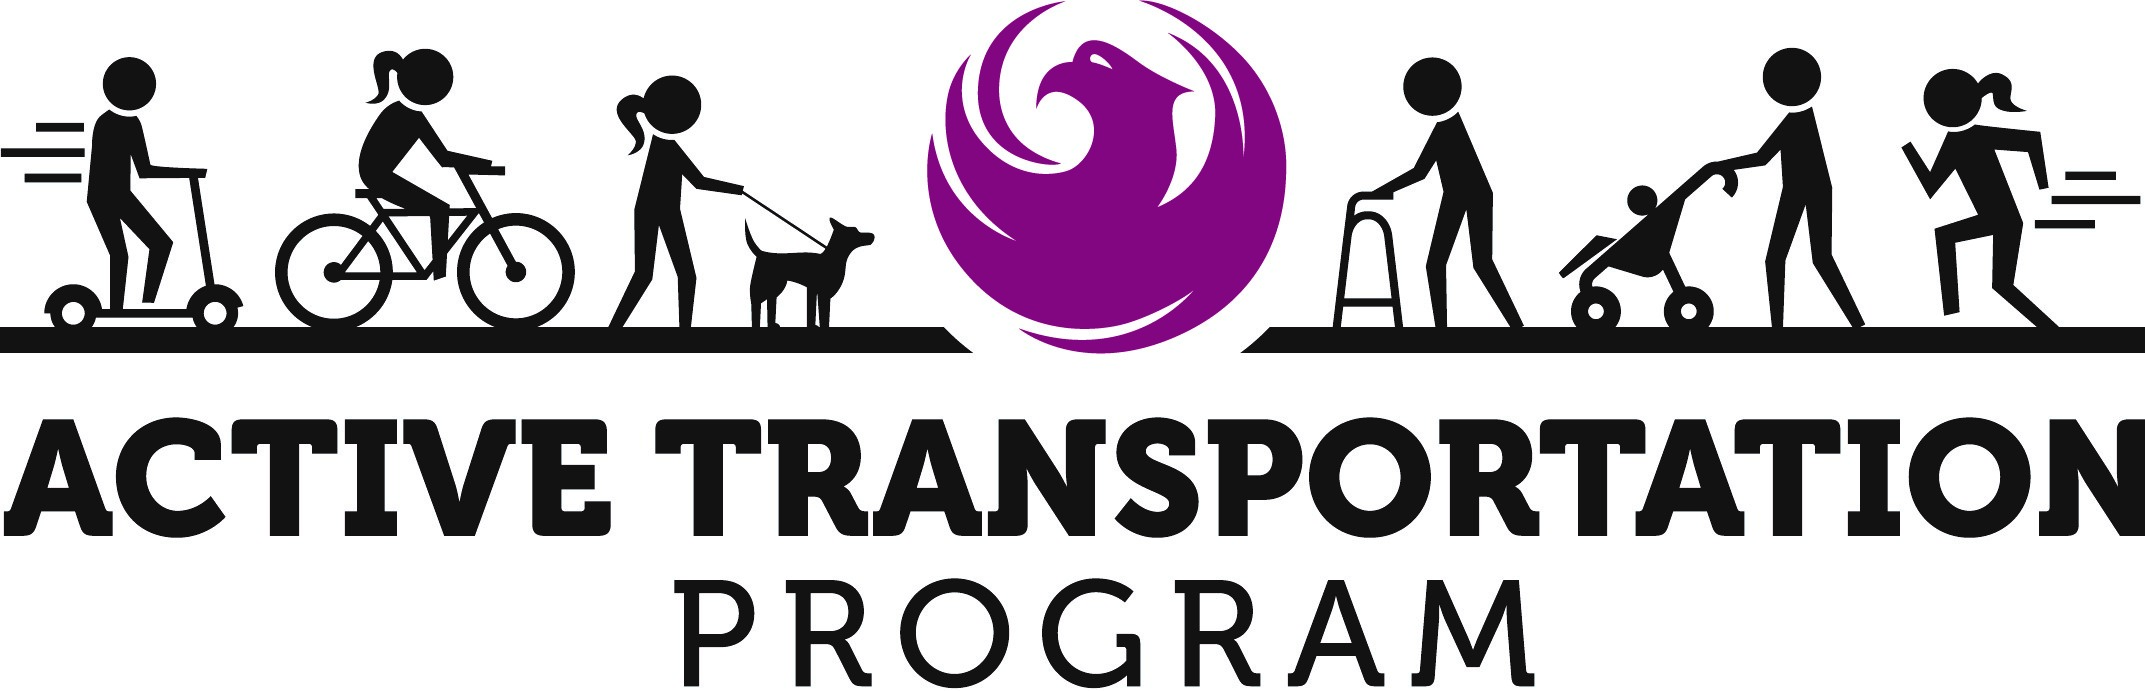 1Active Transportation Program Logo-horizontal-color.jpg